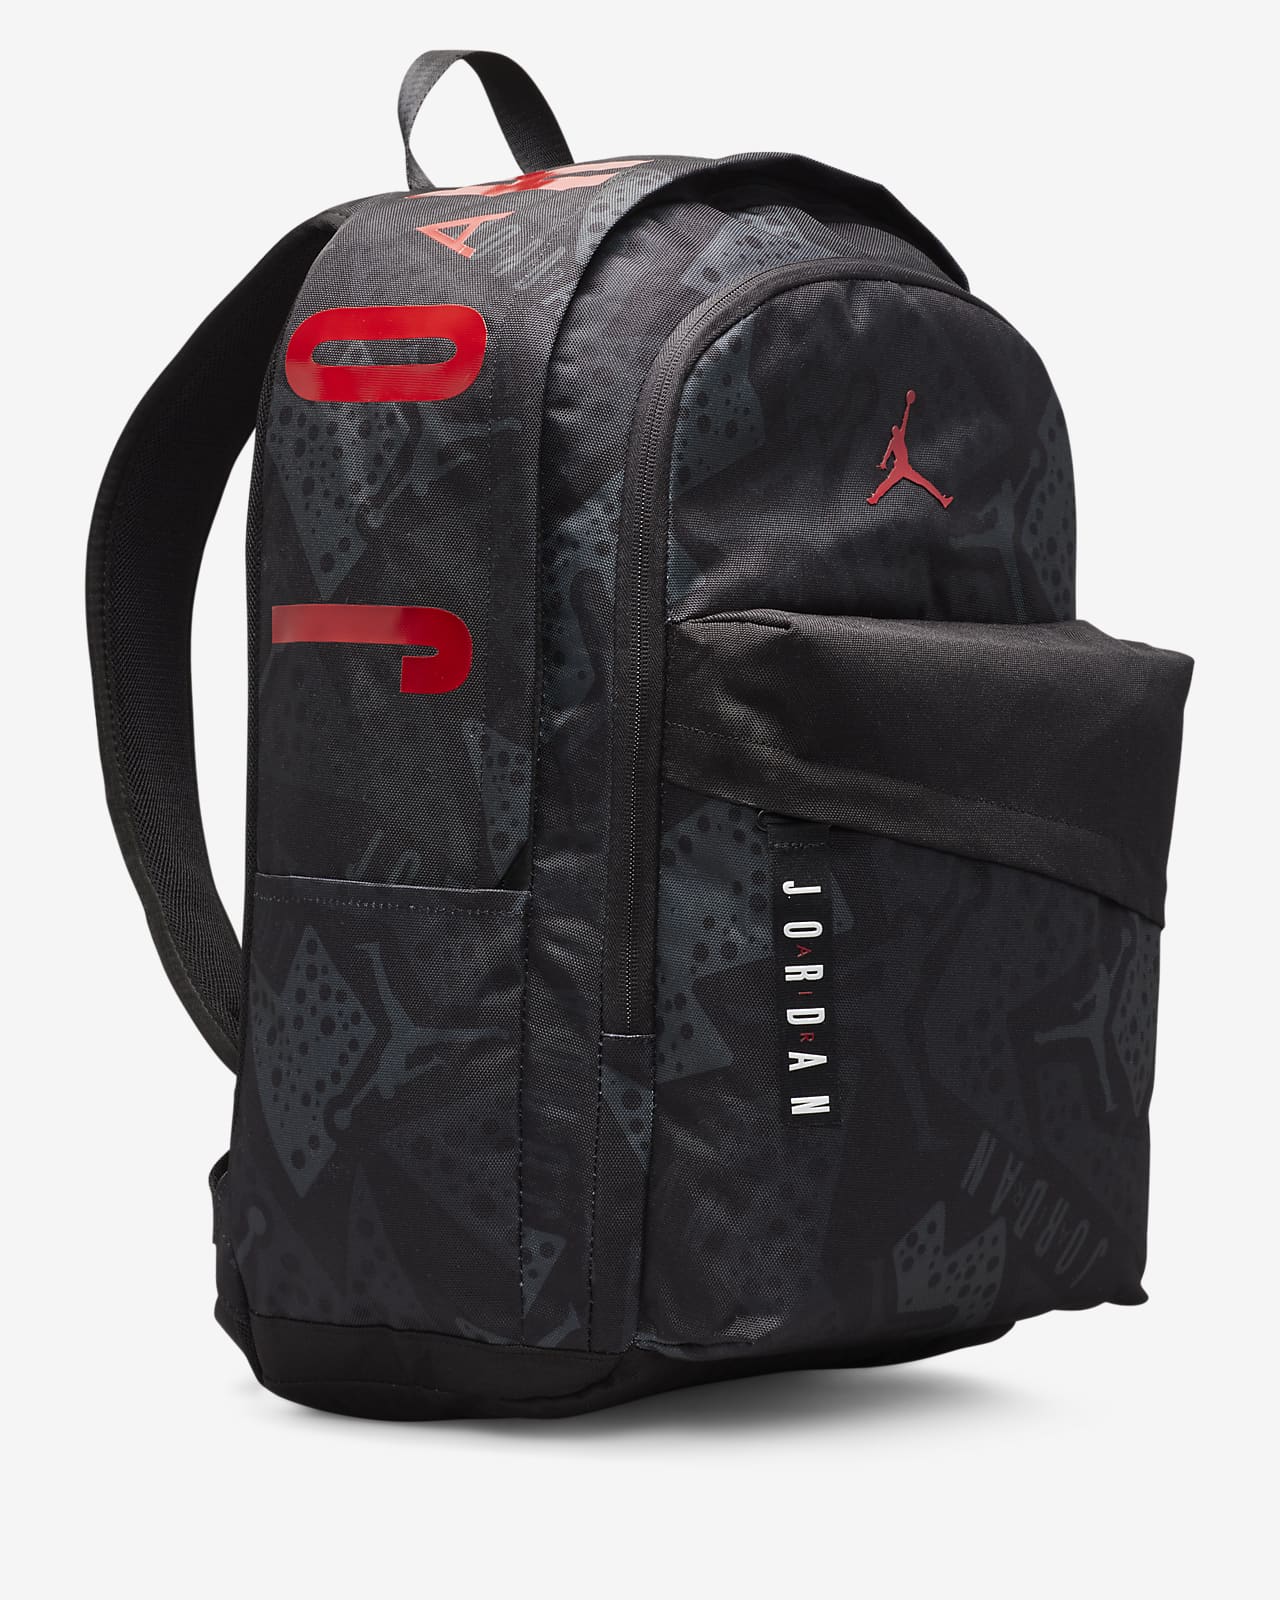 jordan backpack red and black